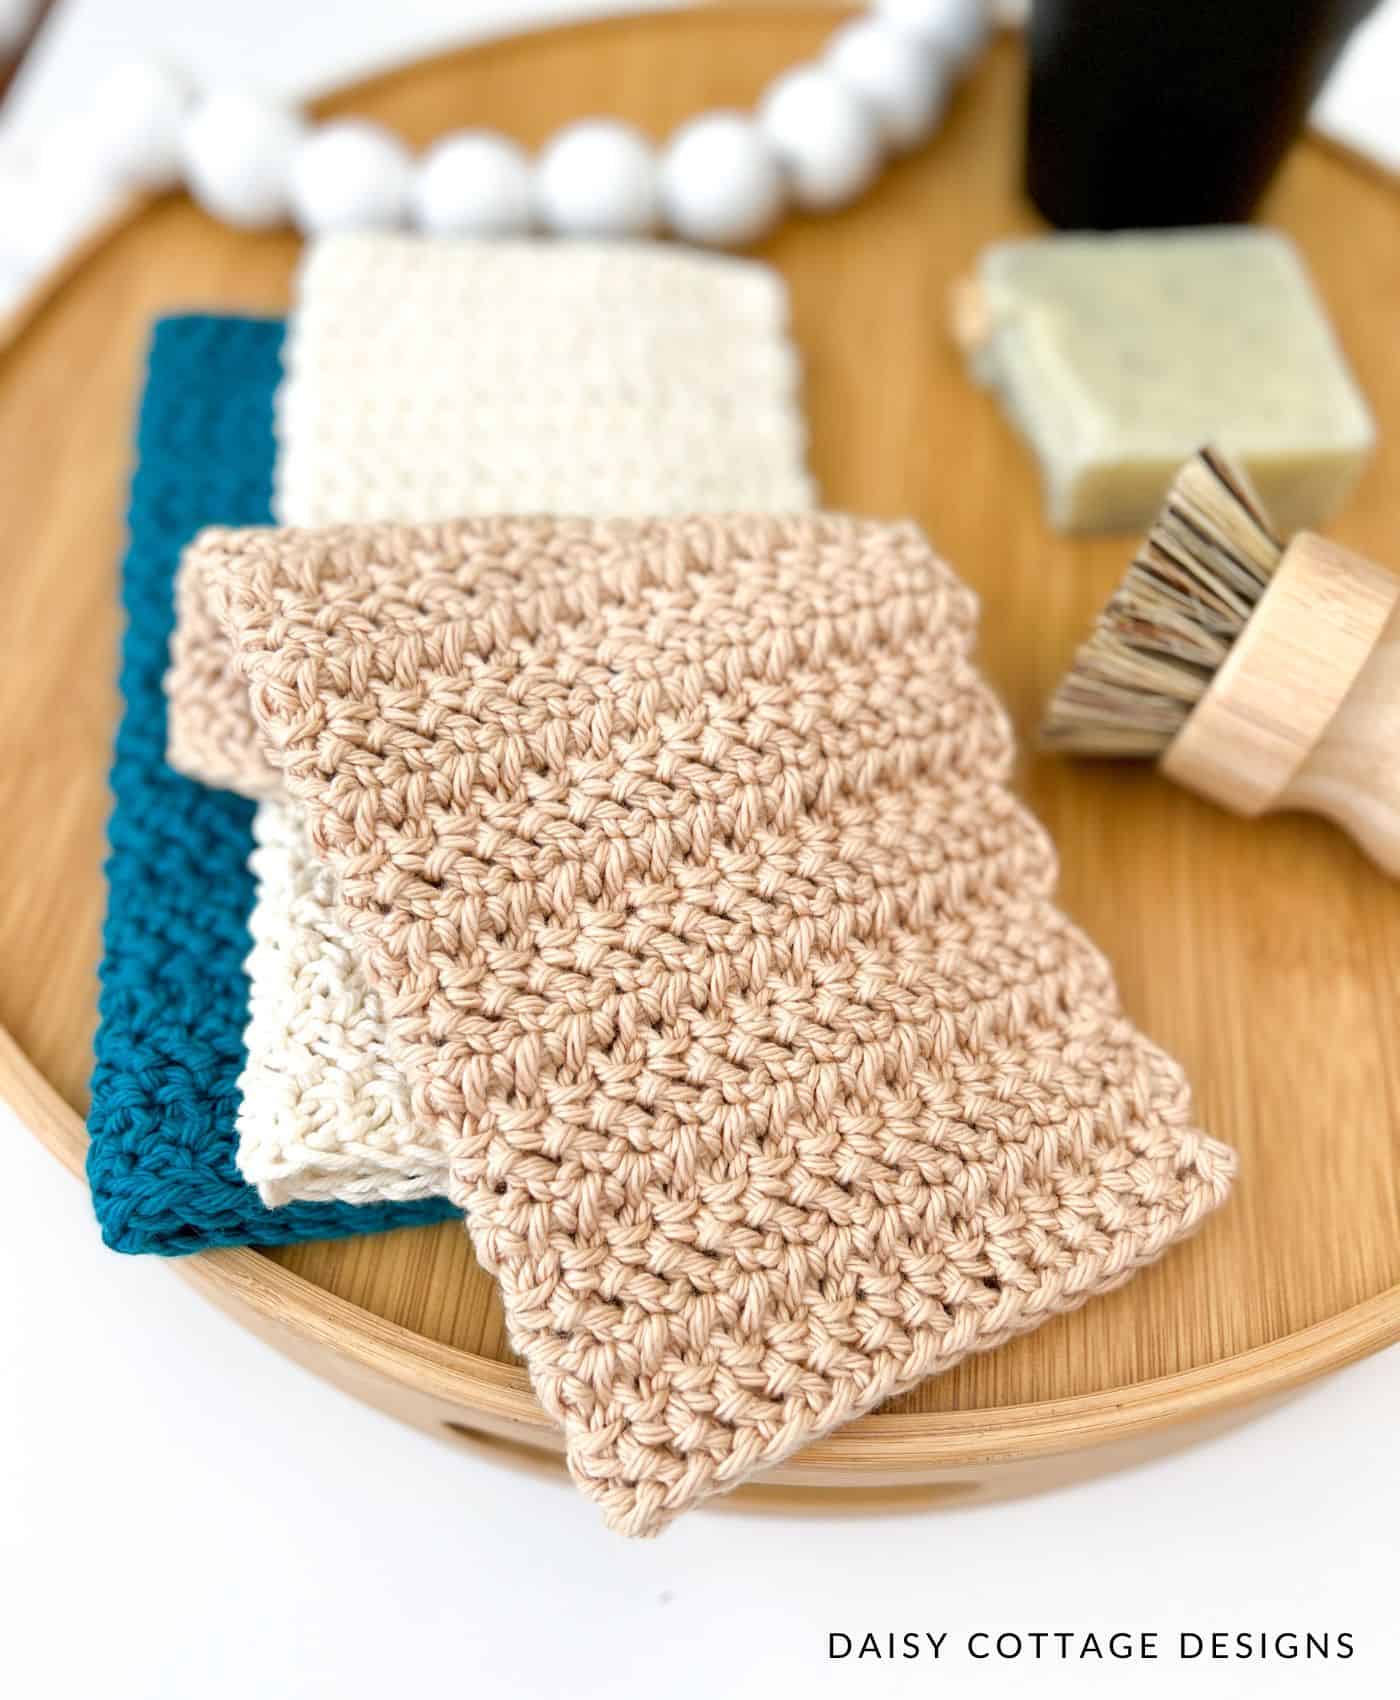 Herringbone Double Crochet Stitch Dishcloths in taupe, cream, and dark teal